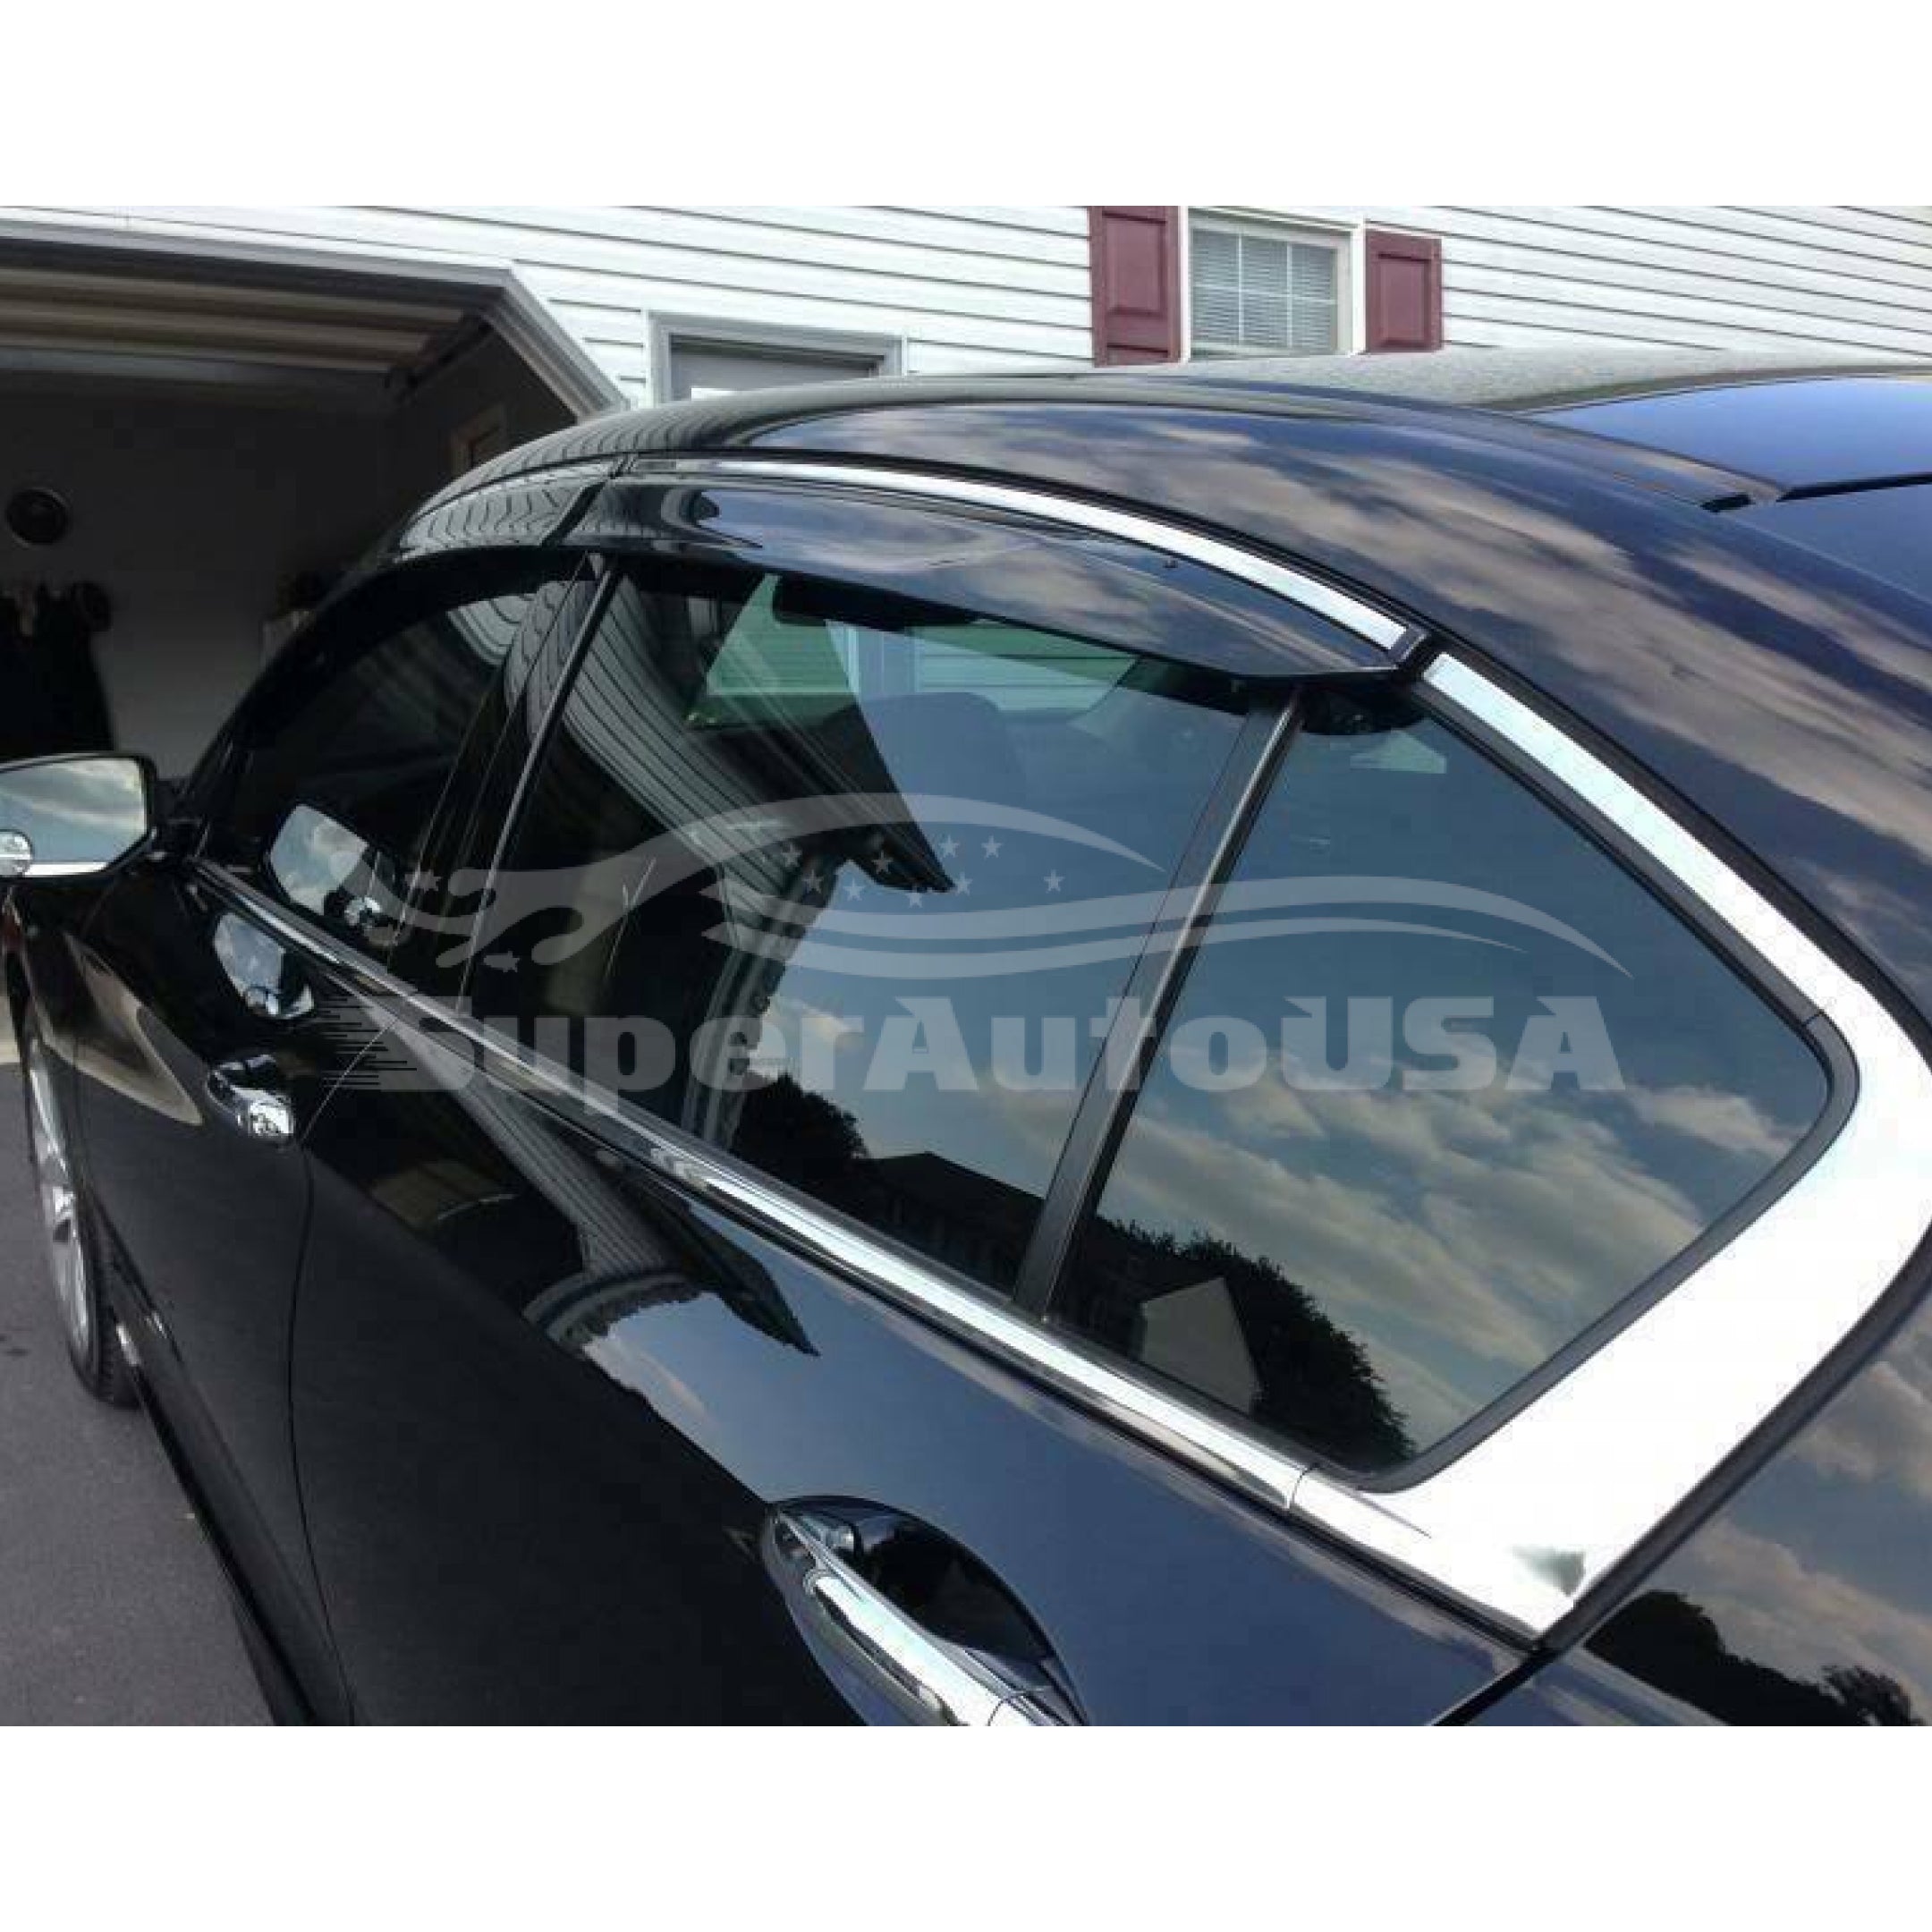 For Hyundai Tucson 2016-2018 Clip-On Chrome Trim Vent Window Visors Rain Sun Wind Guards Shade Deflectors